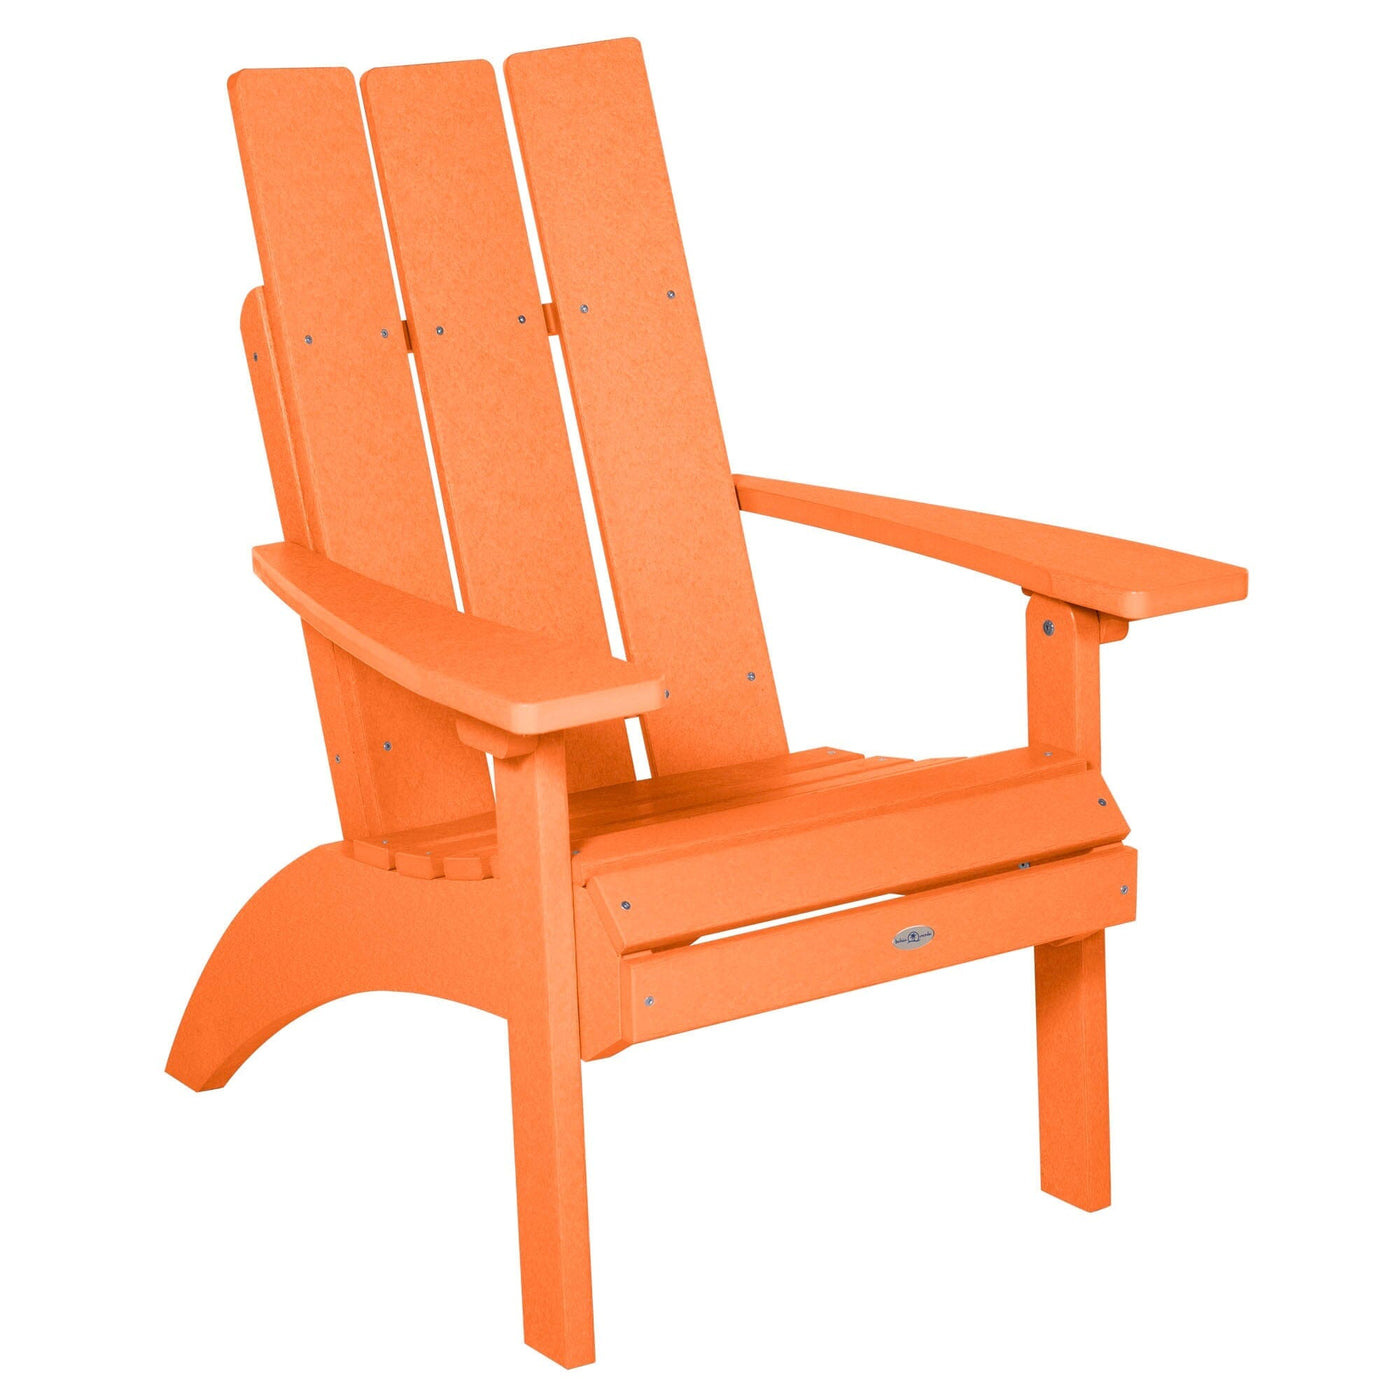 Corolla Comfort Height Adirondack Chair Chair Bahia Verde Outdoors Citrus Orange 